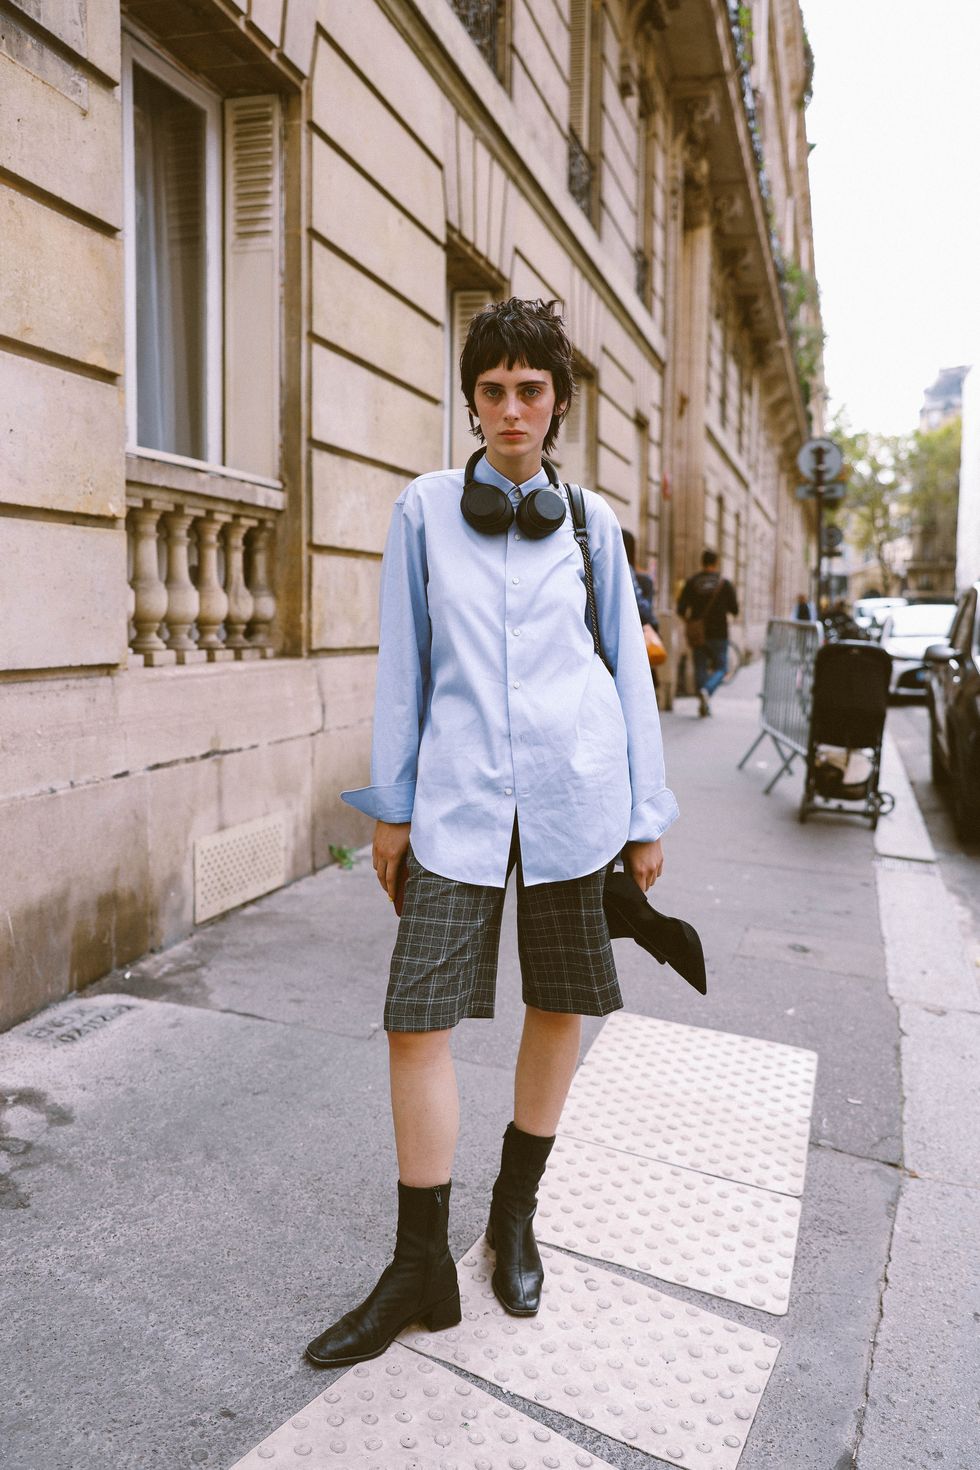 Paris Fashion Week: Street Style Fashion Photography — PCA